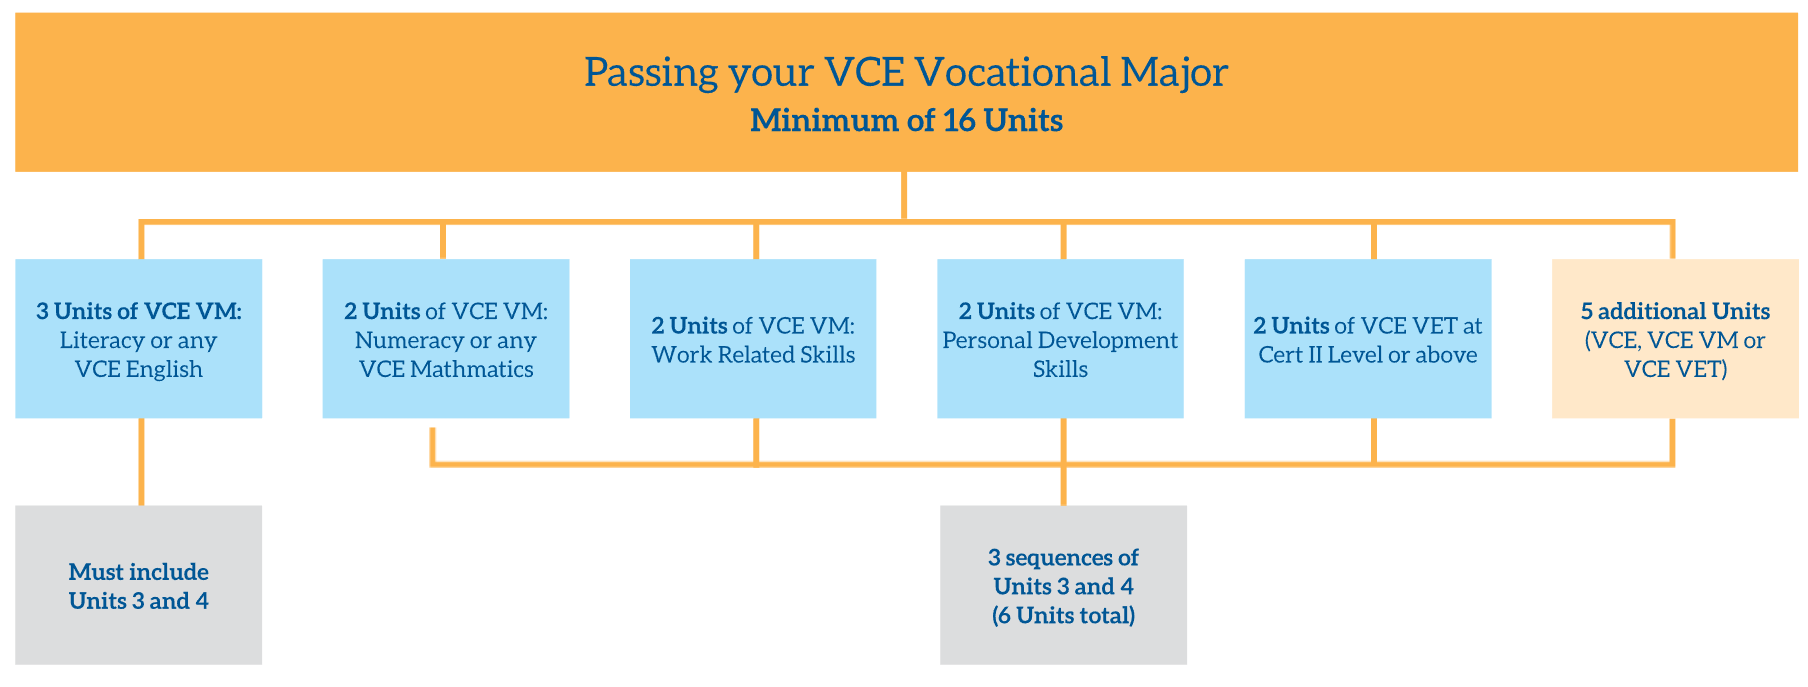 VCE Vocational Major